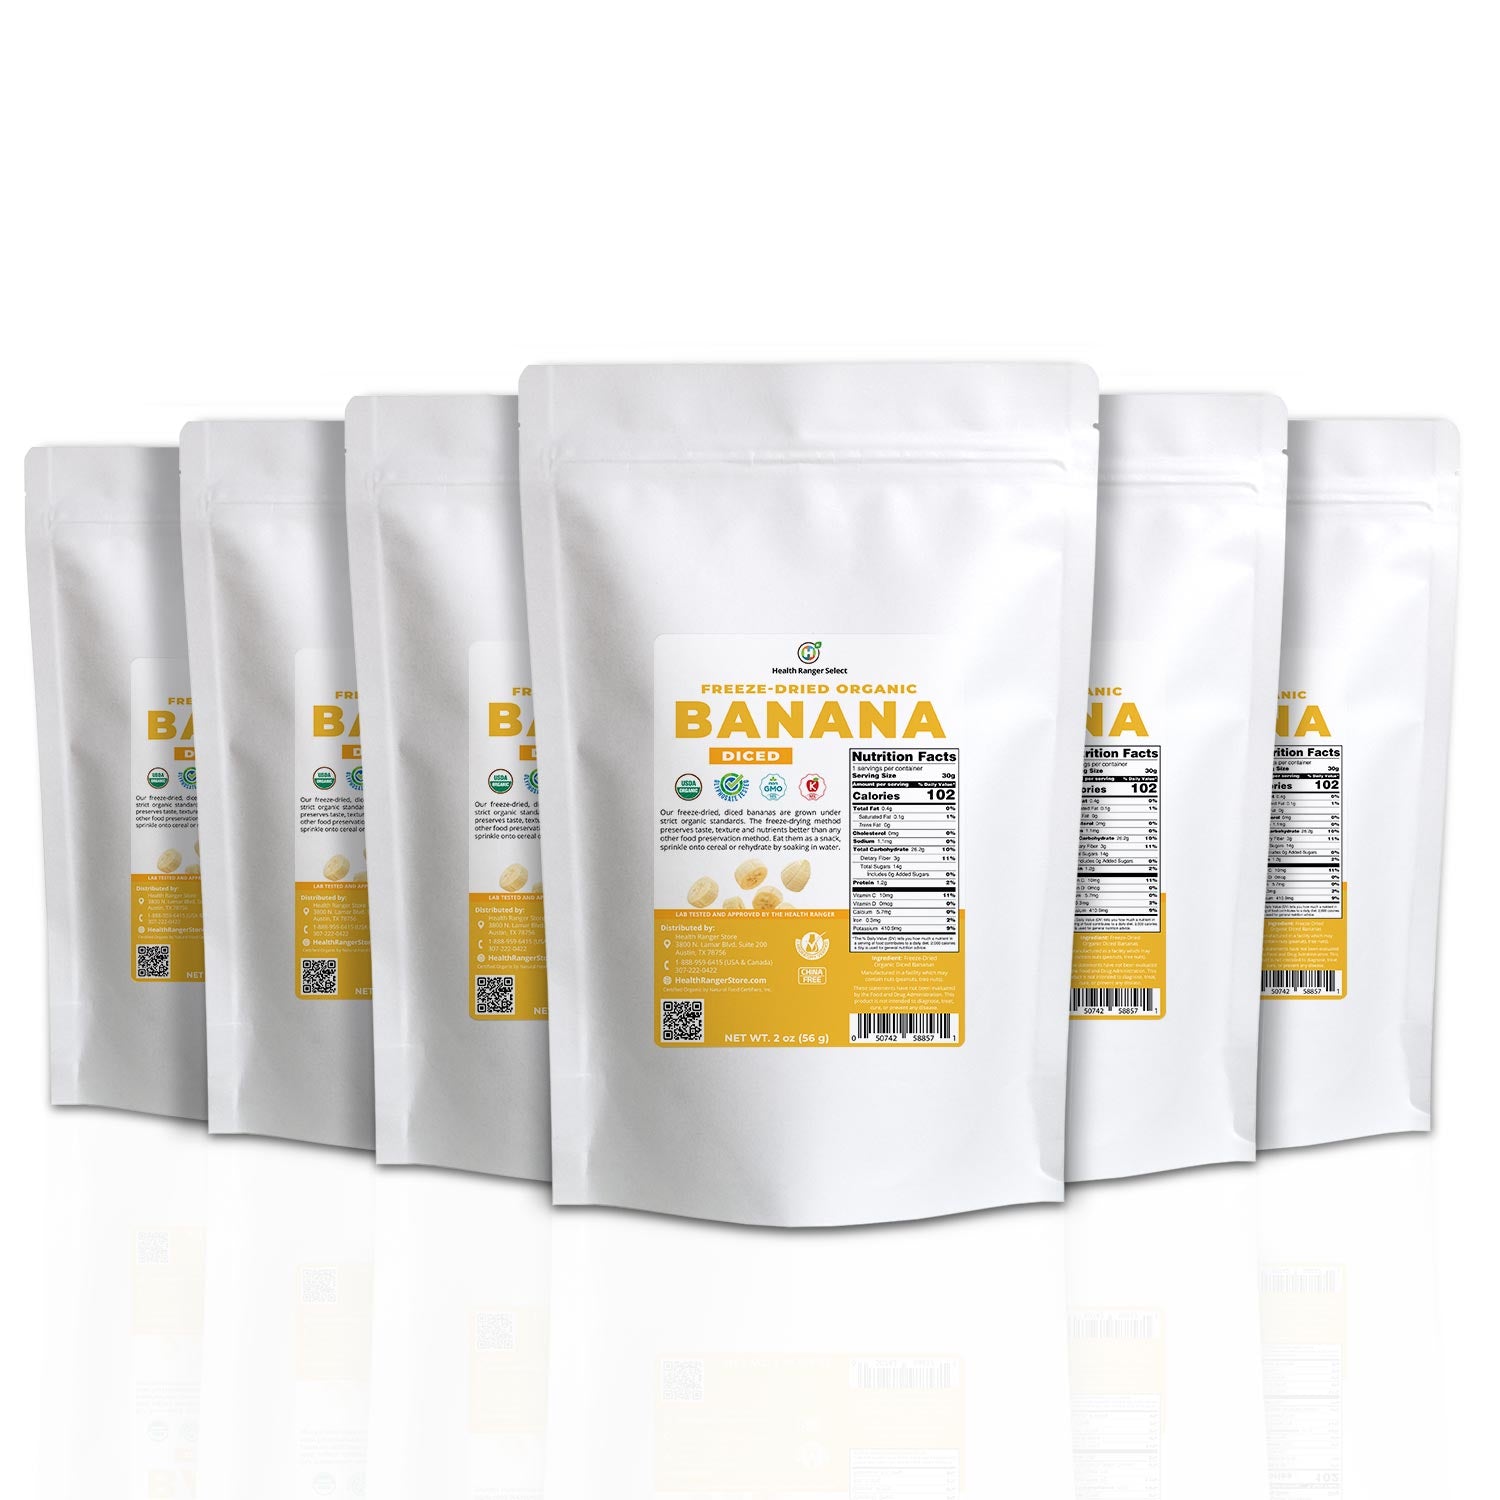 Freeze-Dried Organic Banana 2oz (56g) (6-Pack)